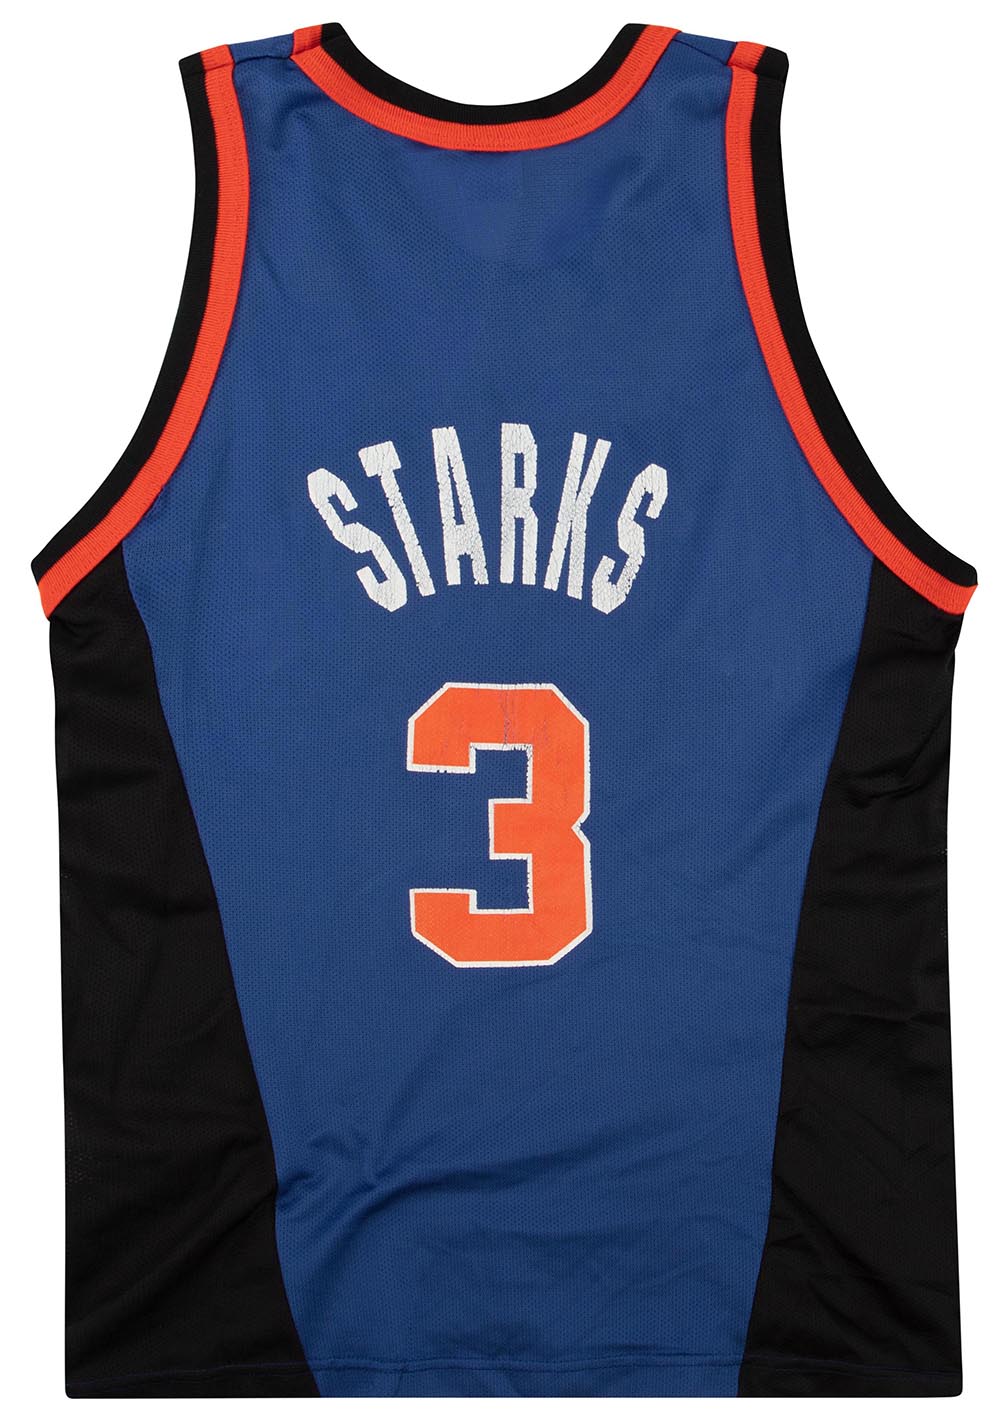 Knicks Tape🟠🔵🟠🔵🟠 New Knicks Champion Jerseys Available In